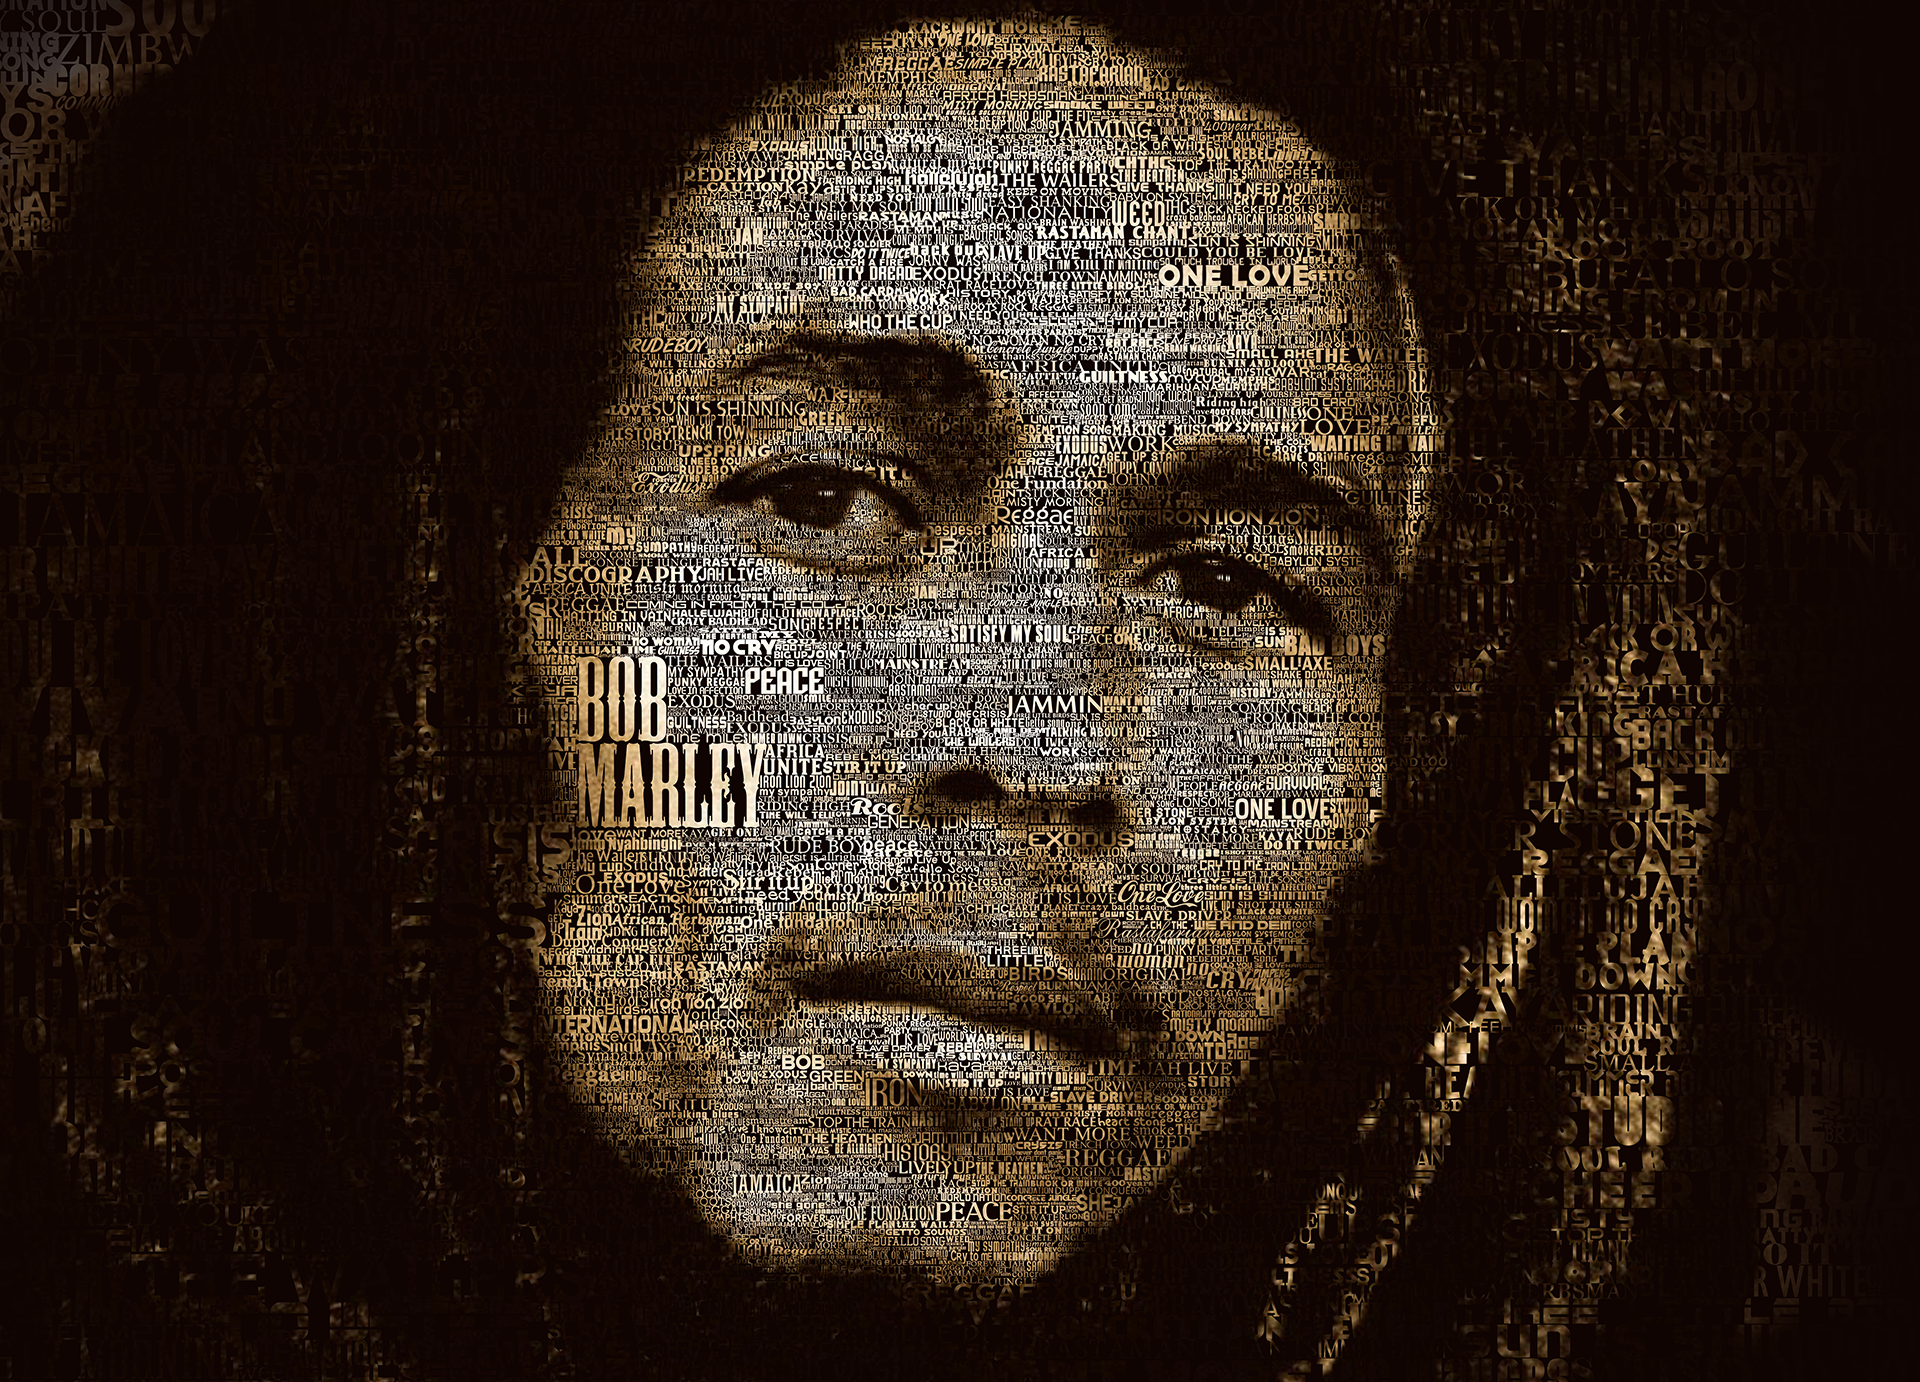 Bob Marley. The discography of life. 2013